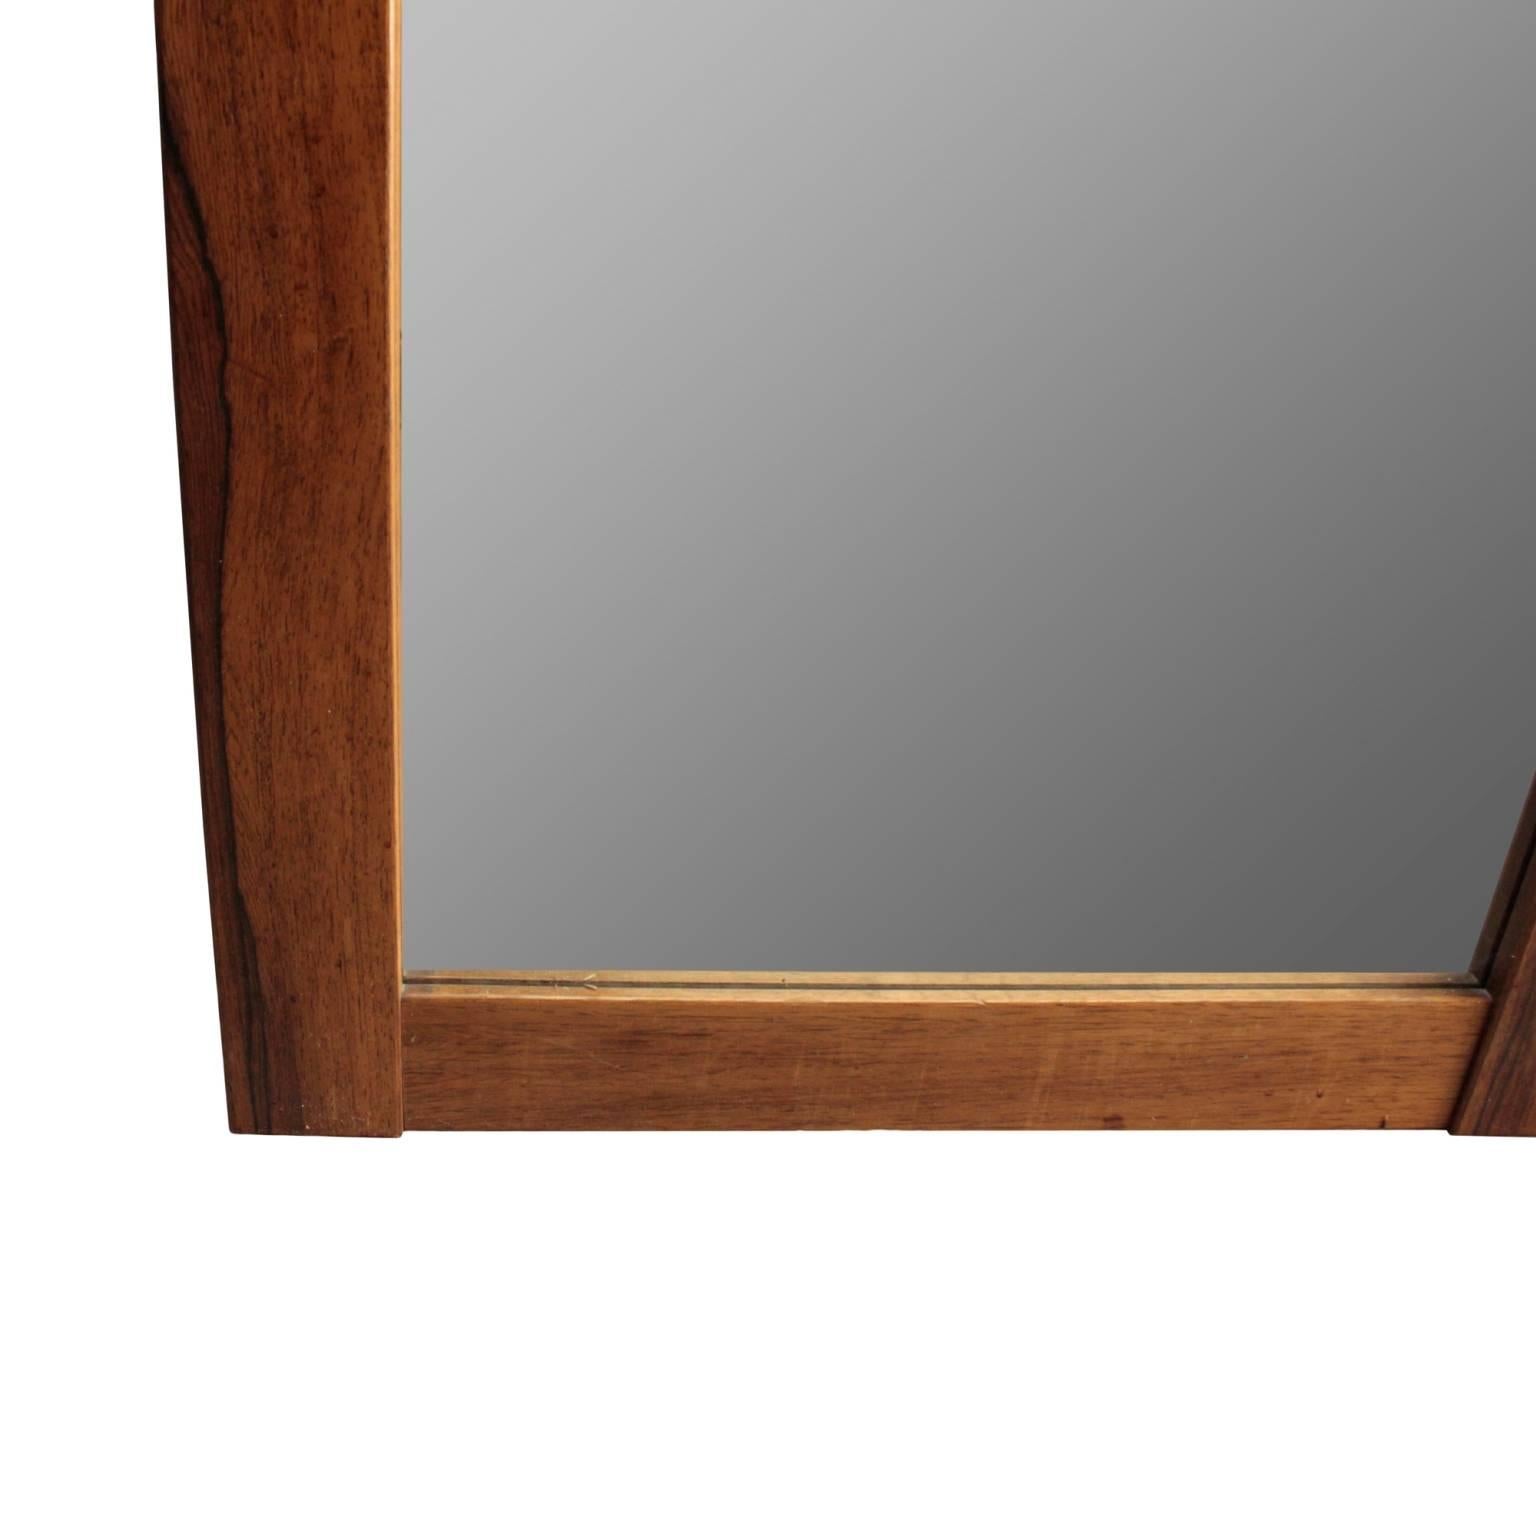 Swedish Mid-Century Modern wall mirror. Minimalist rectangular frame in palisander. Retaining original label.